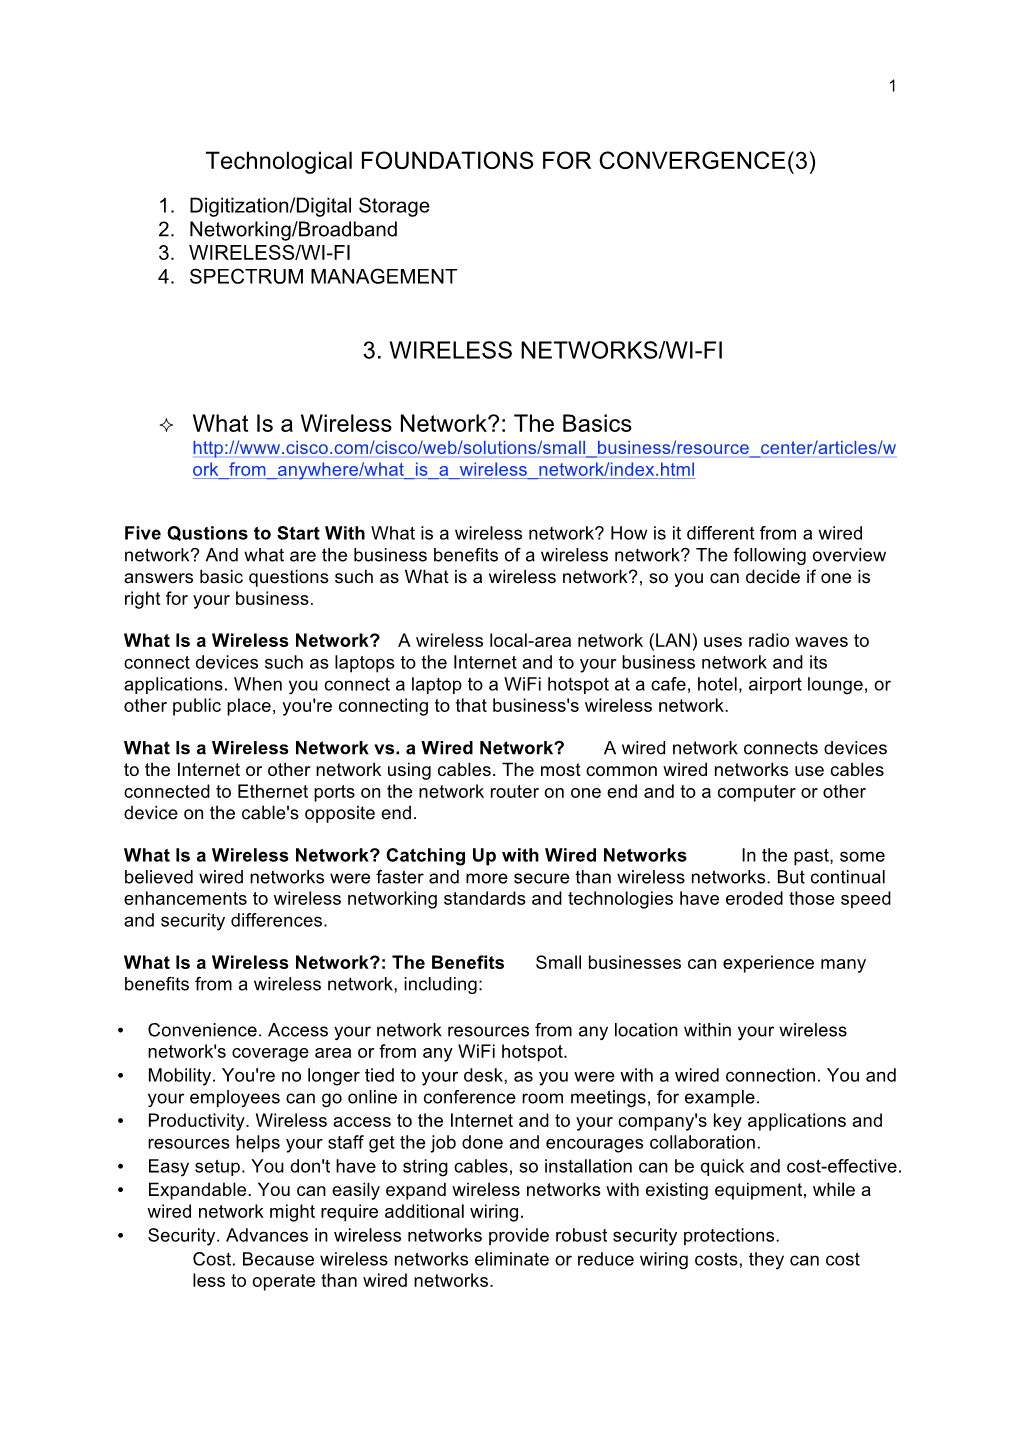 3. WIRELESS NETWORKS/WI-FI What Is a Wireless Network?